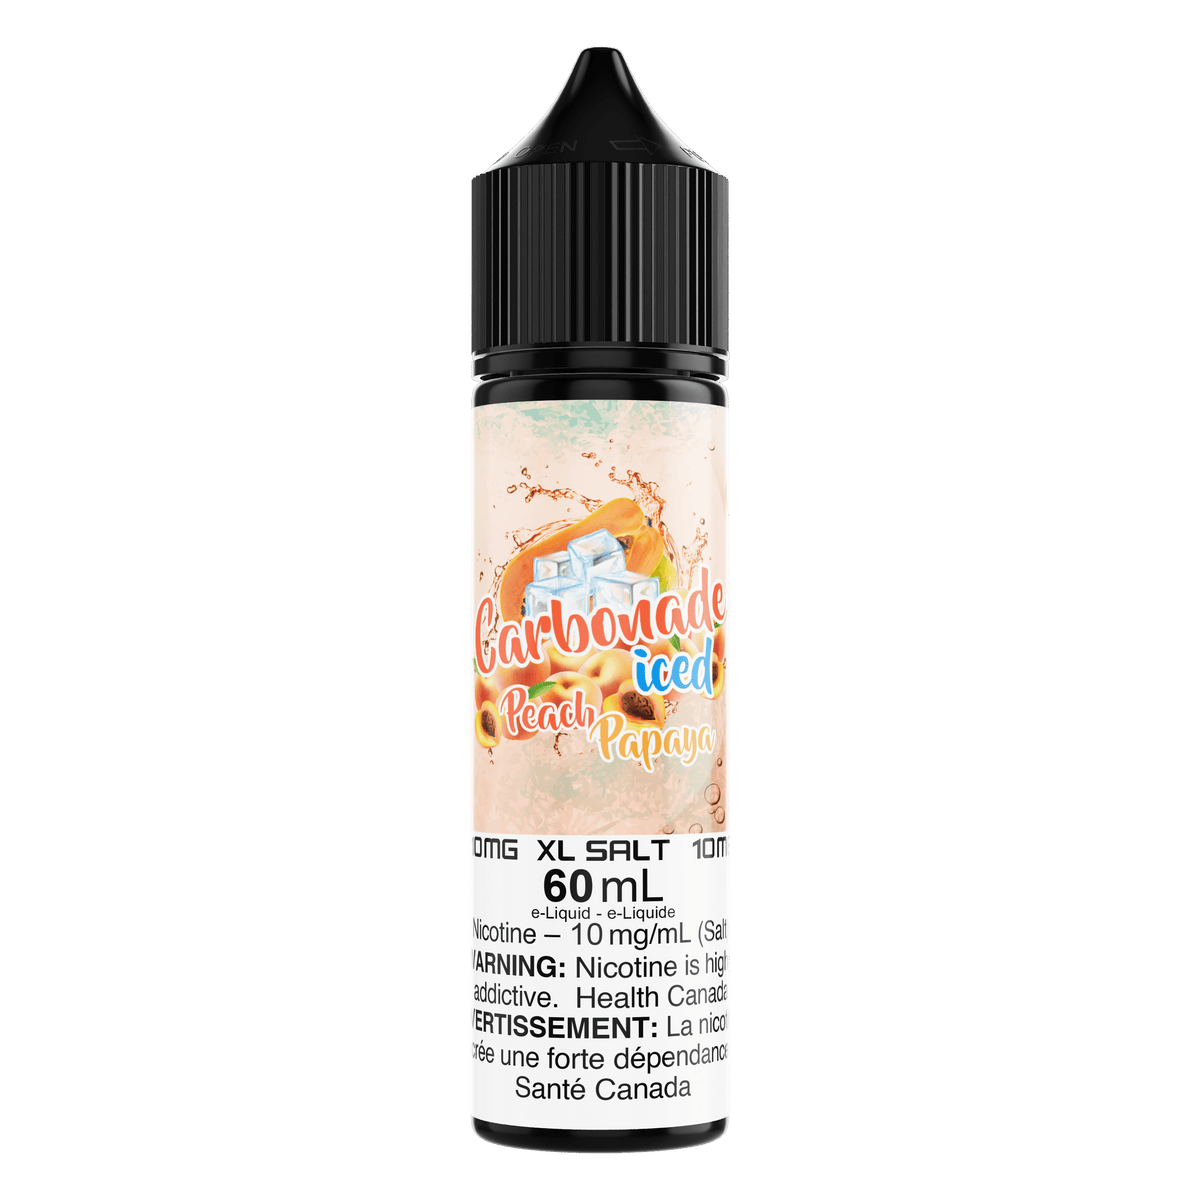 Carbonade XL Salt - Peach Papaya Ice available on Canada online vape shop